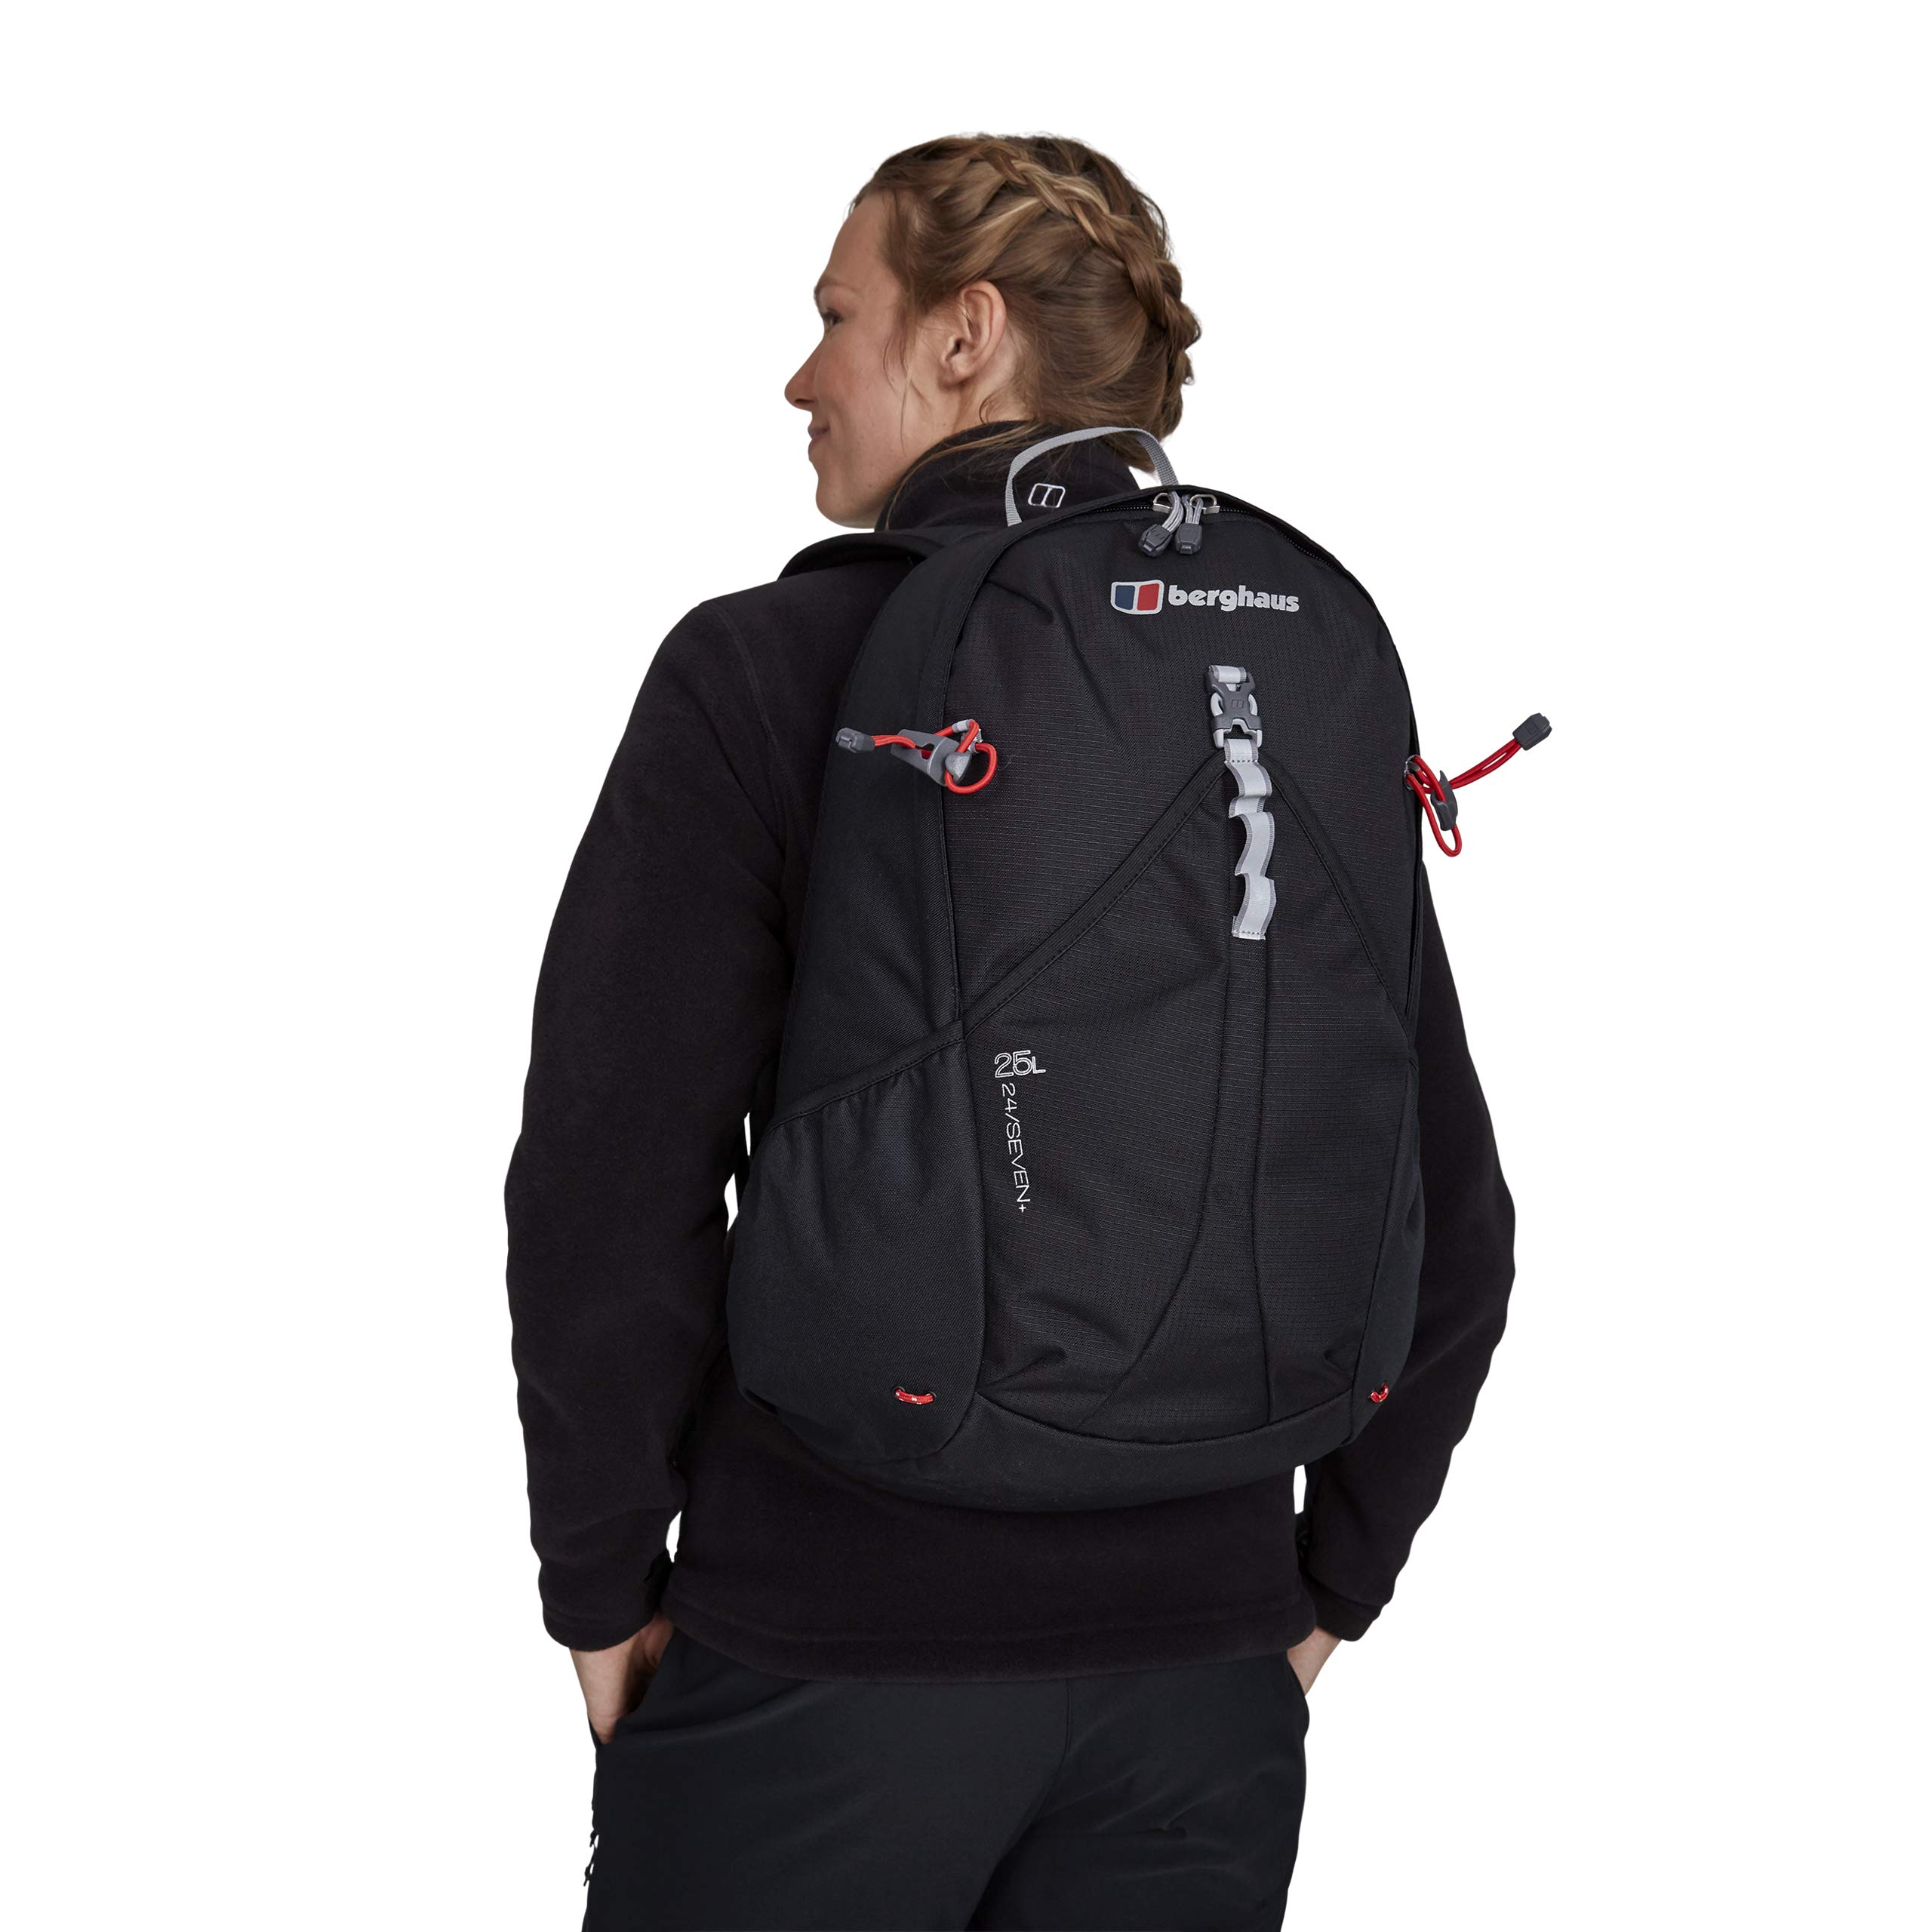 Berghaus Backpack, Black, One Size